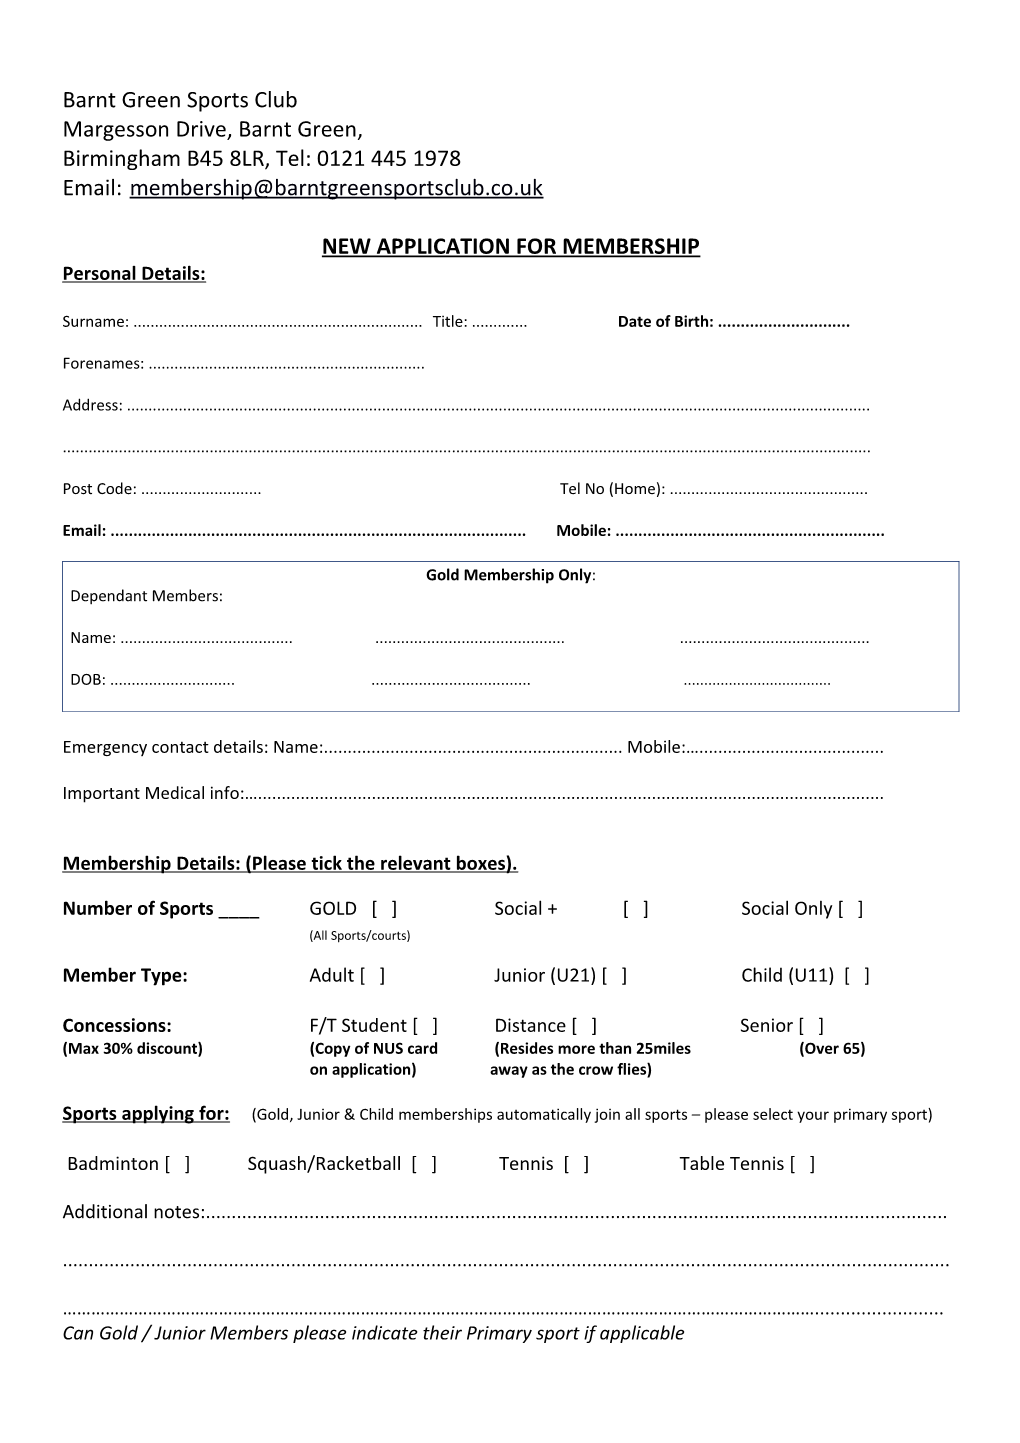 New Application for Membership